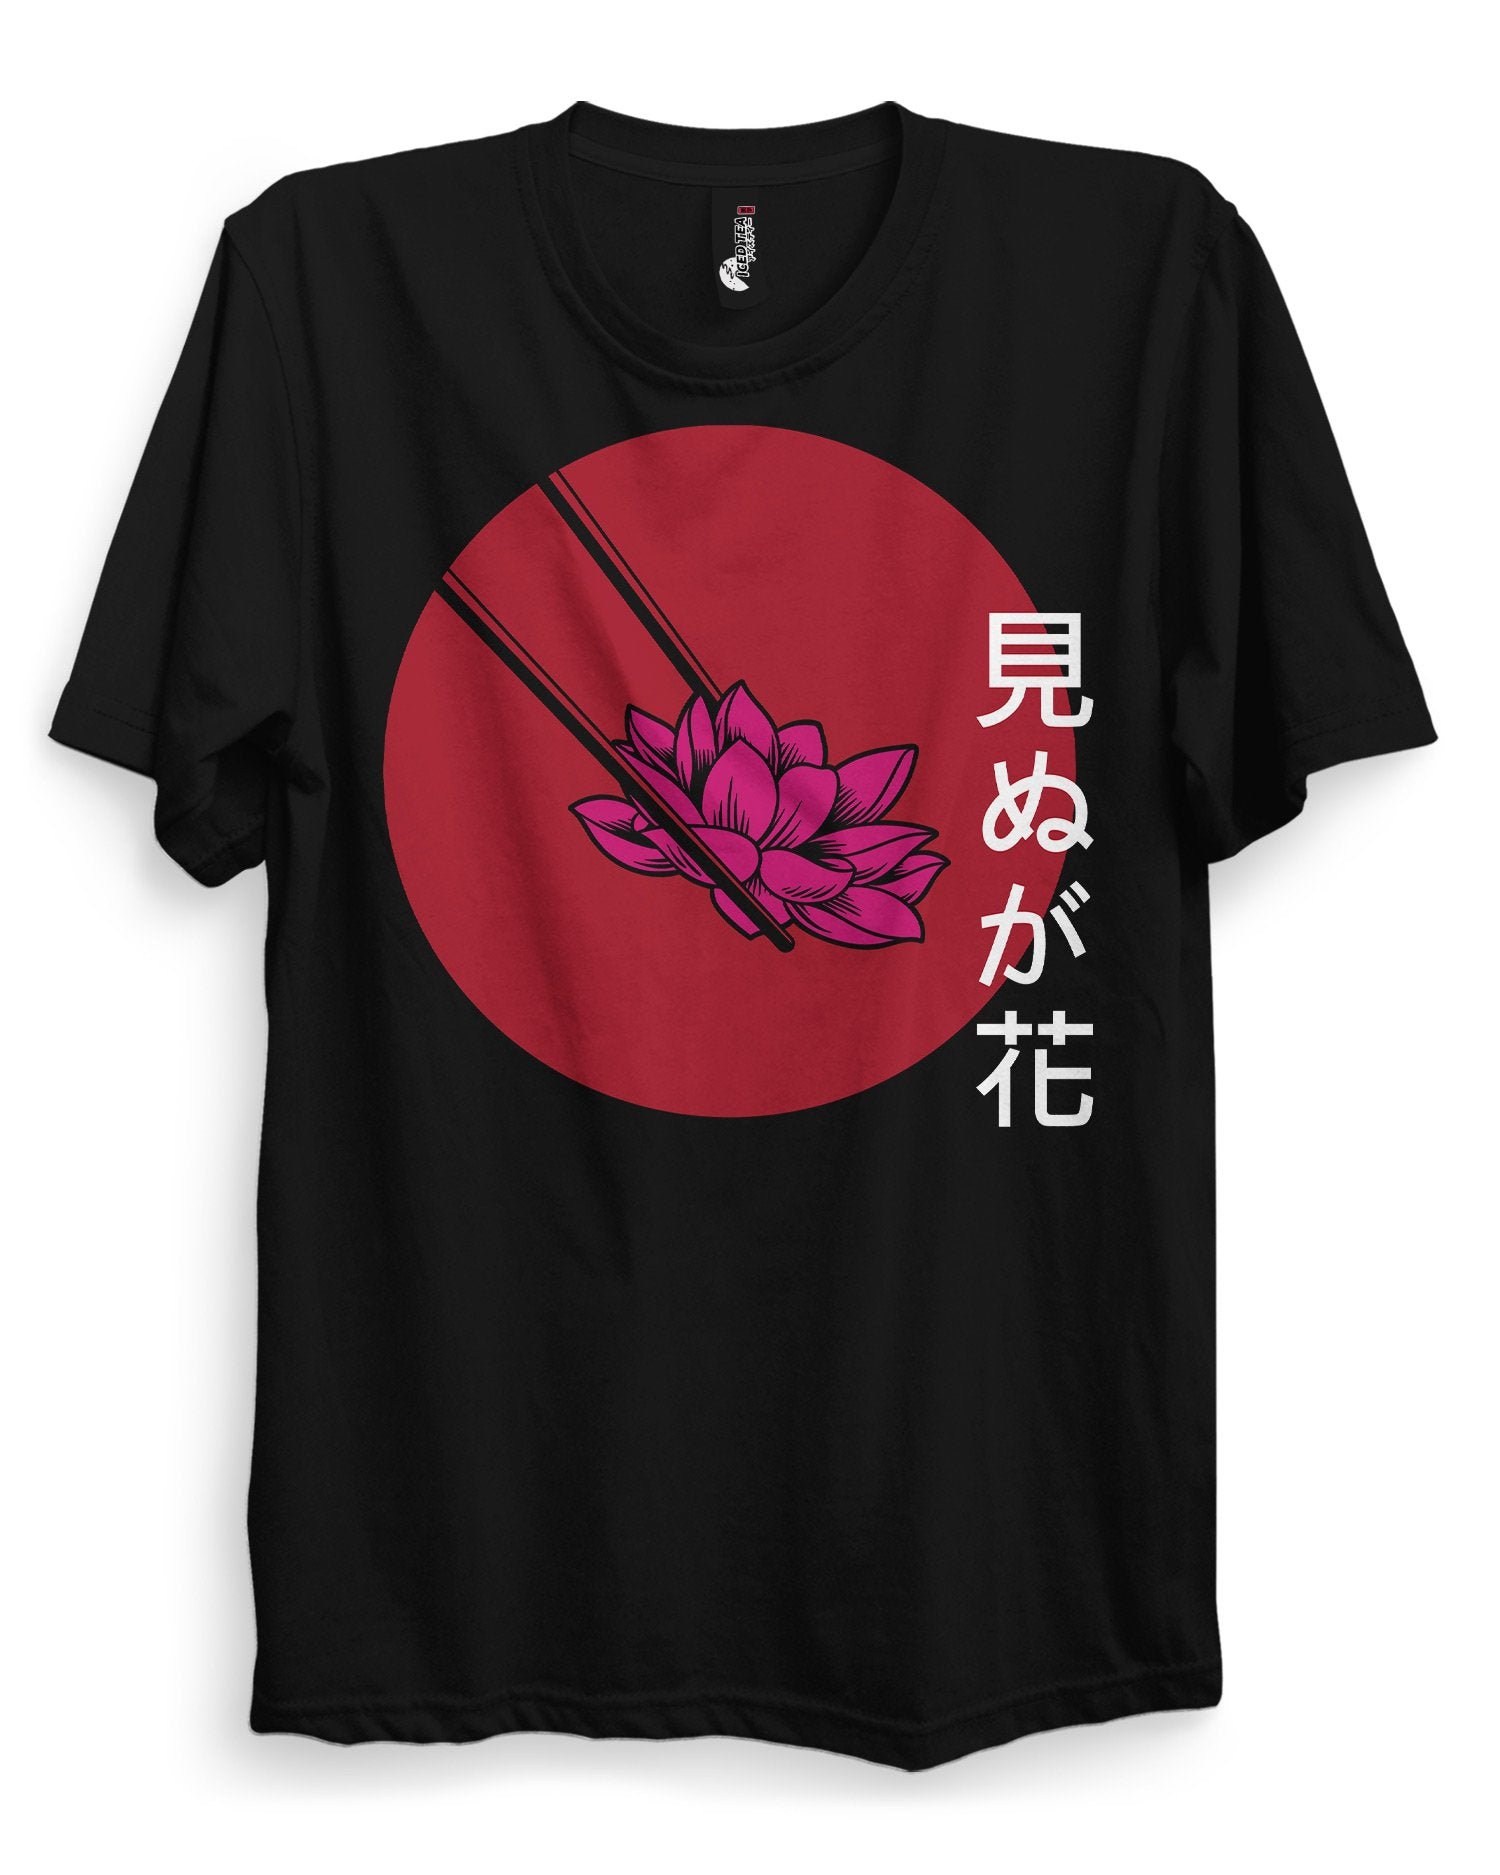 Imagination - Aesthetic T-Shirt - Dark Aesthetics and Anime Clothing Streetwear